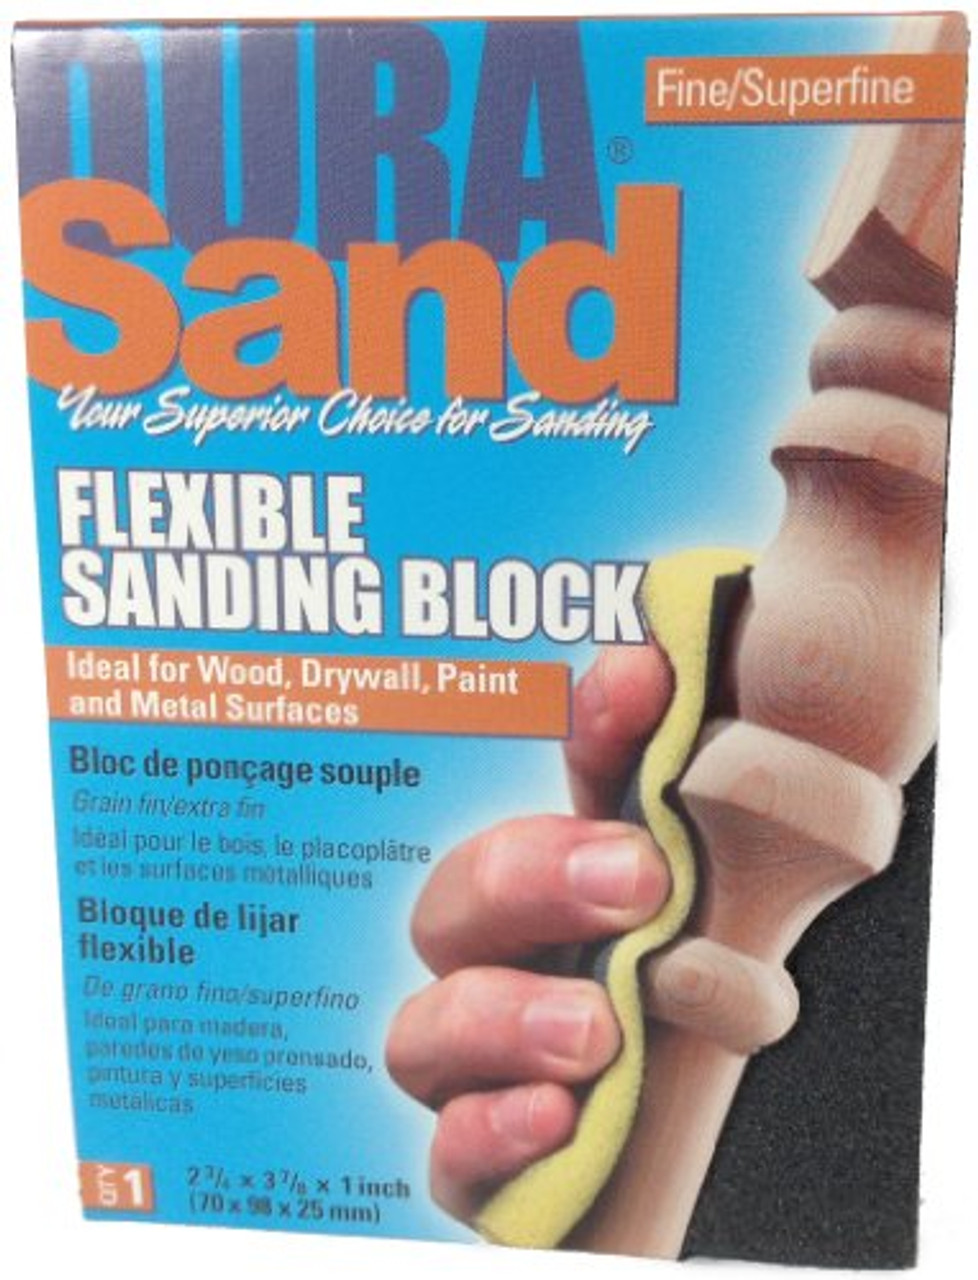 DuraSand Dual Grit Foam Sanding Block (Fine/Superfine)